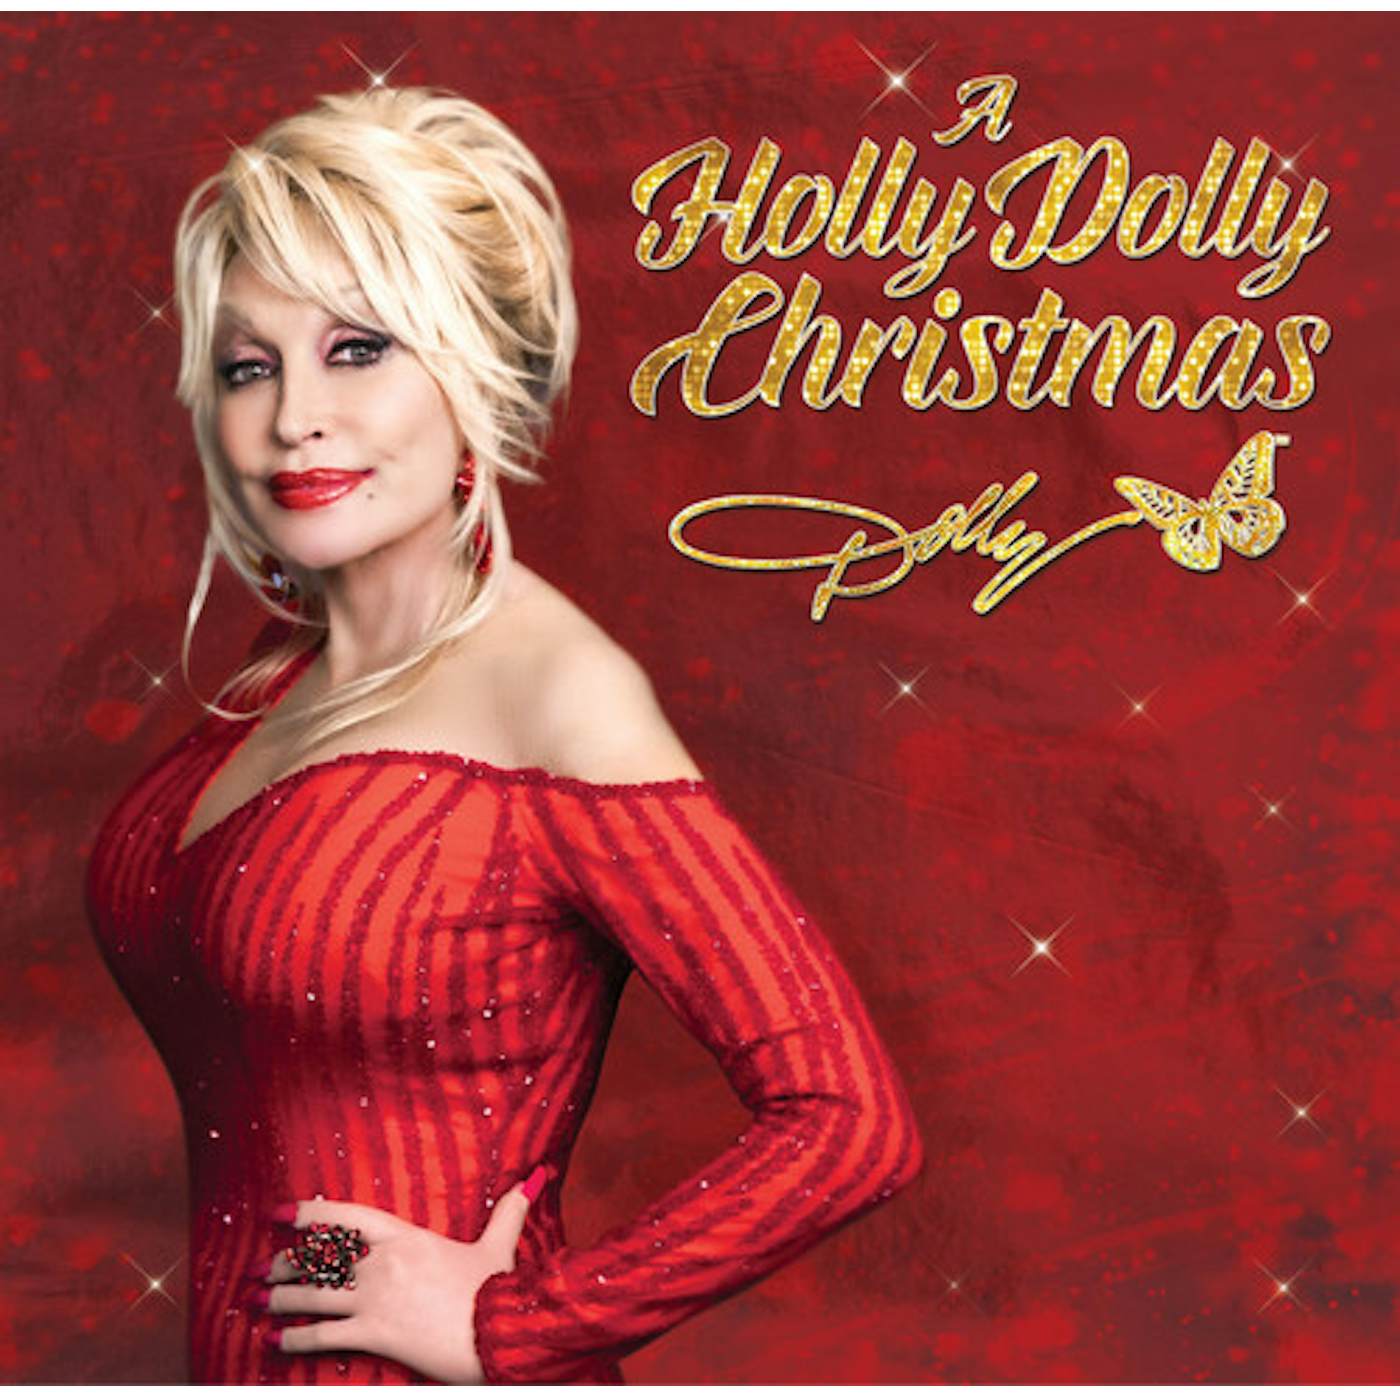 Dolly Parton A Holly Dolly Christmas (2LP / White) Vinyl Record